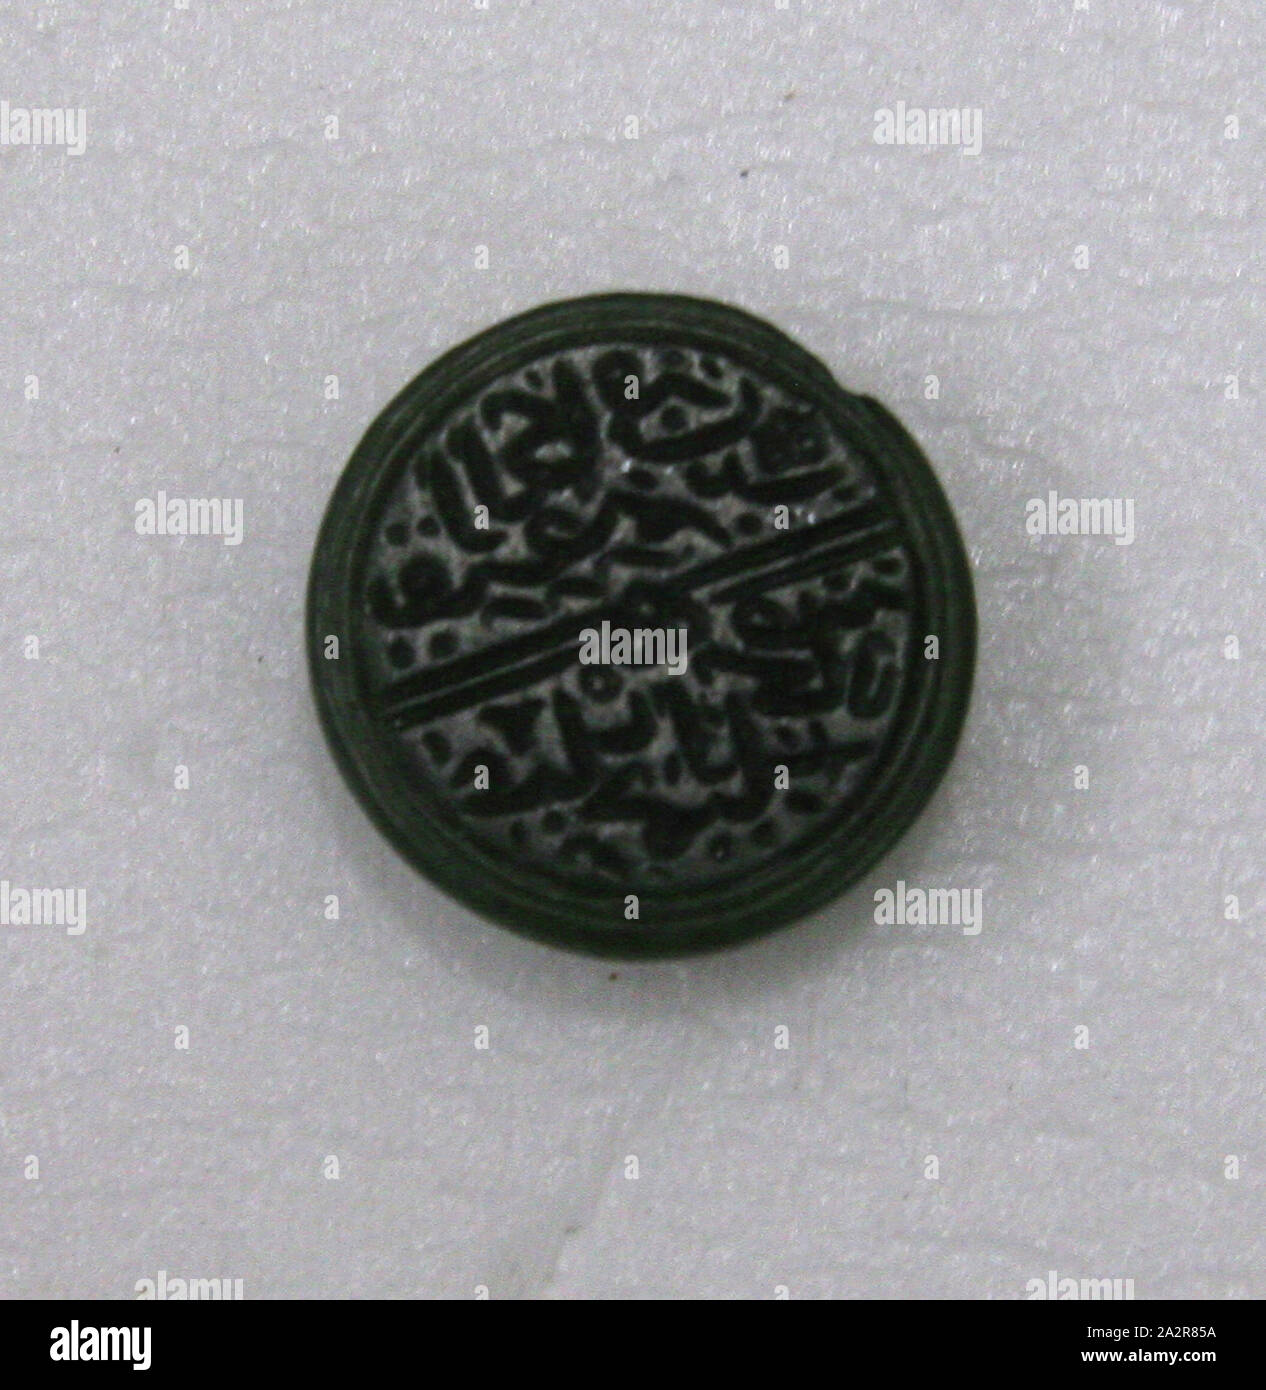 Osmanli Seal, Diam: 3/4 in. (1,9 cm. Foto de stock